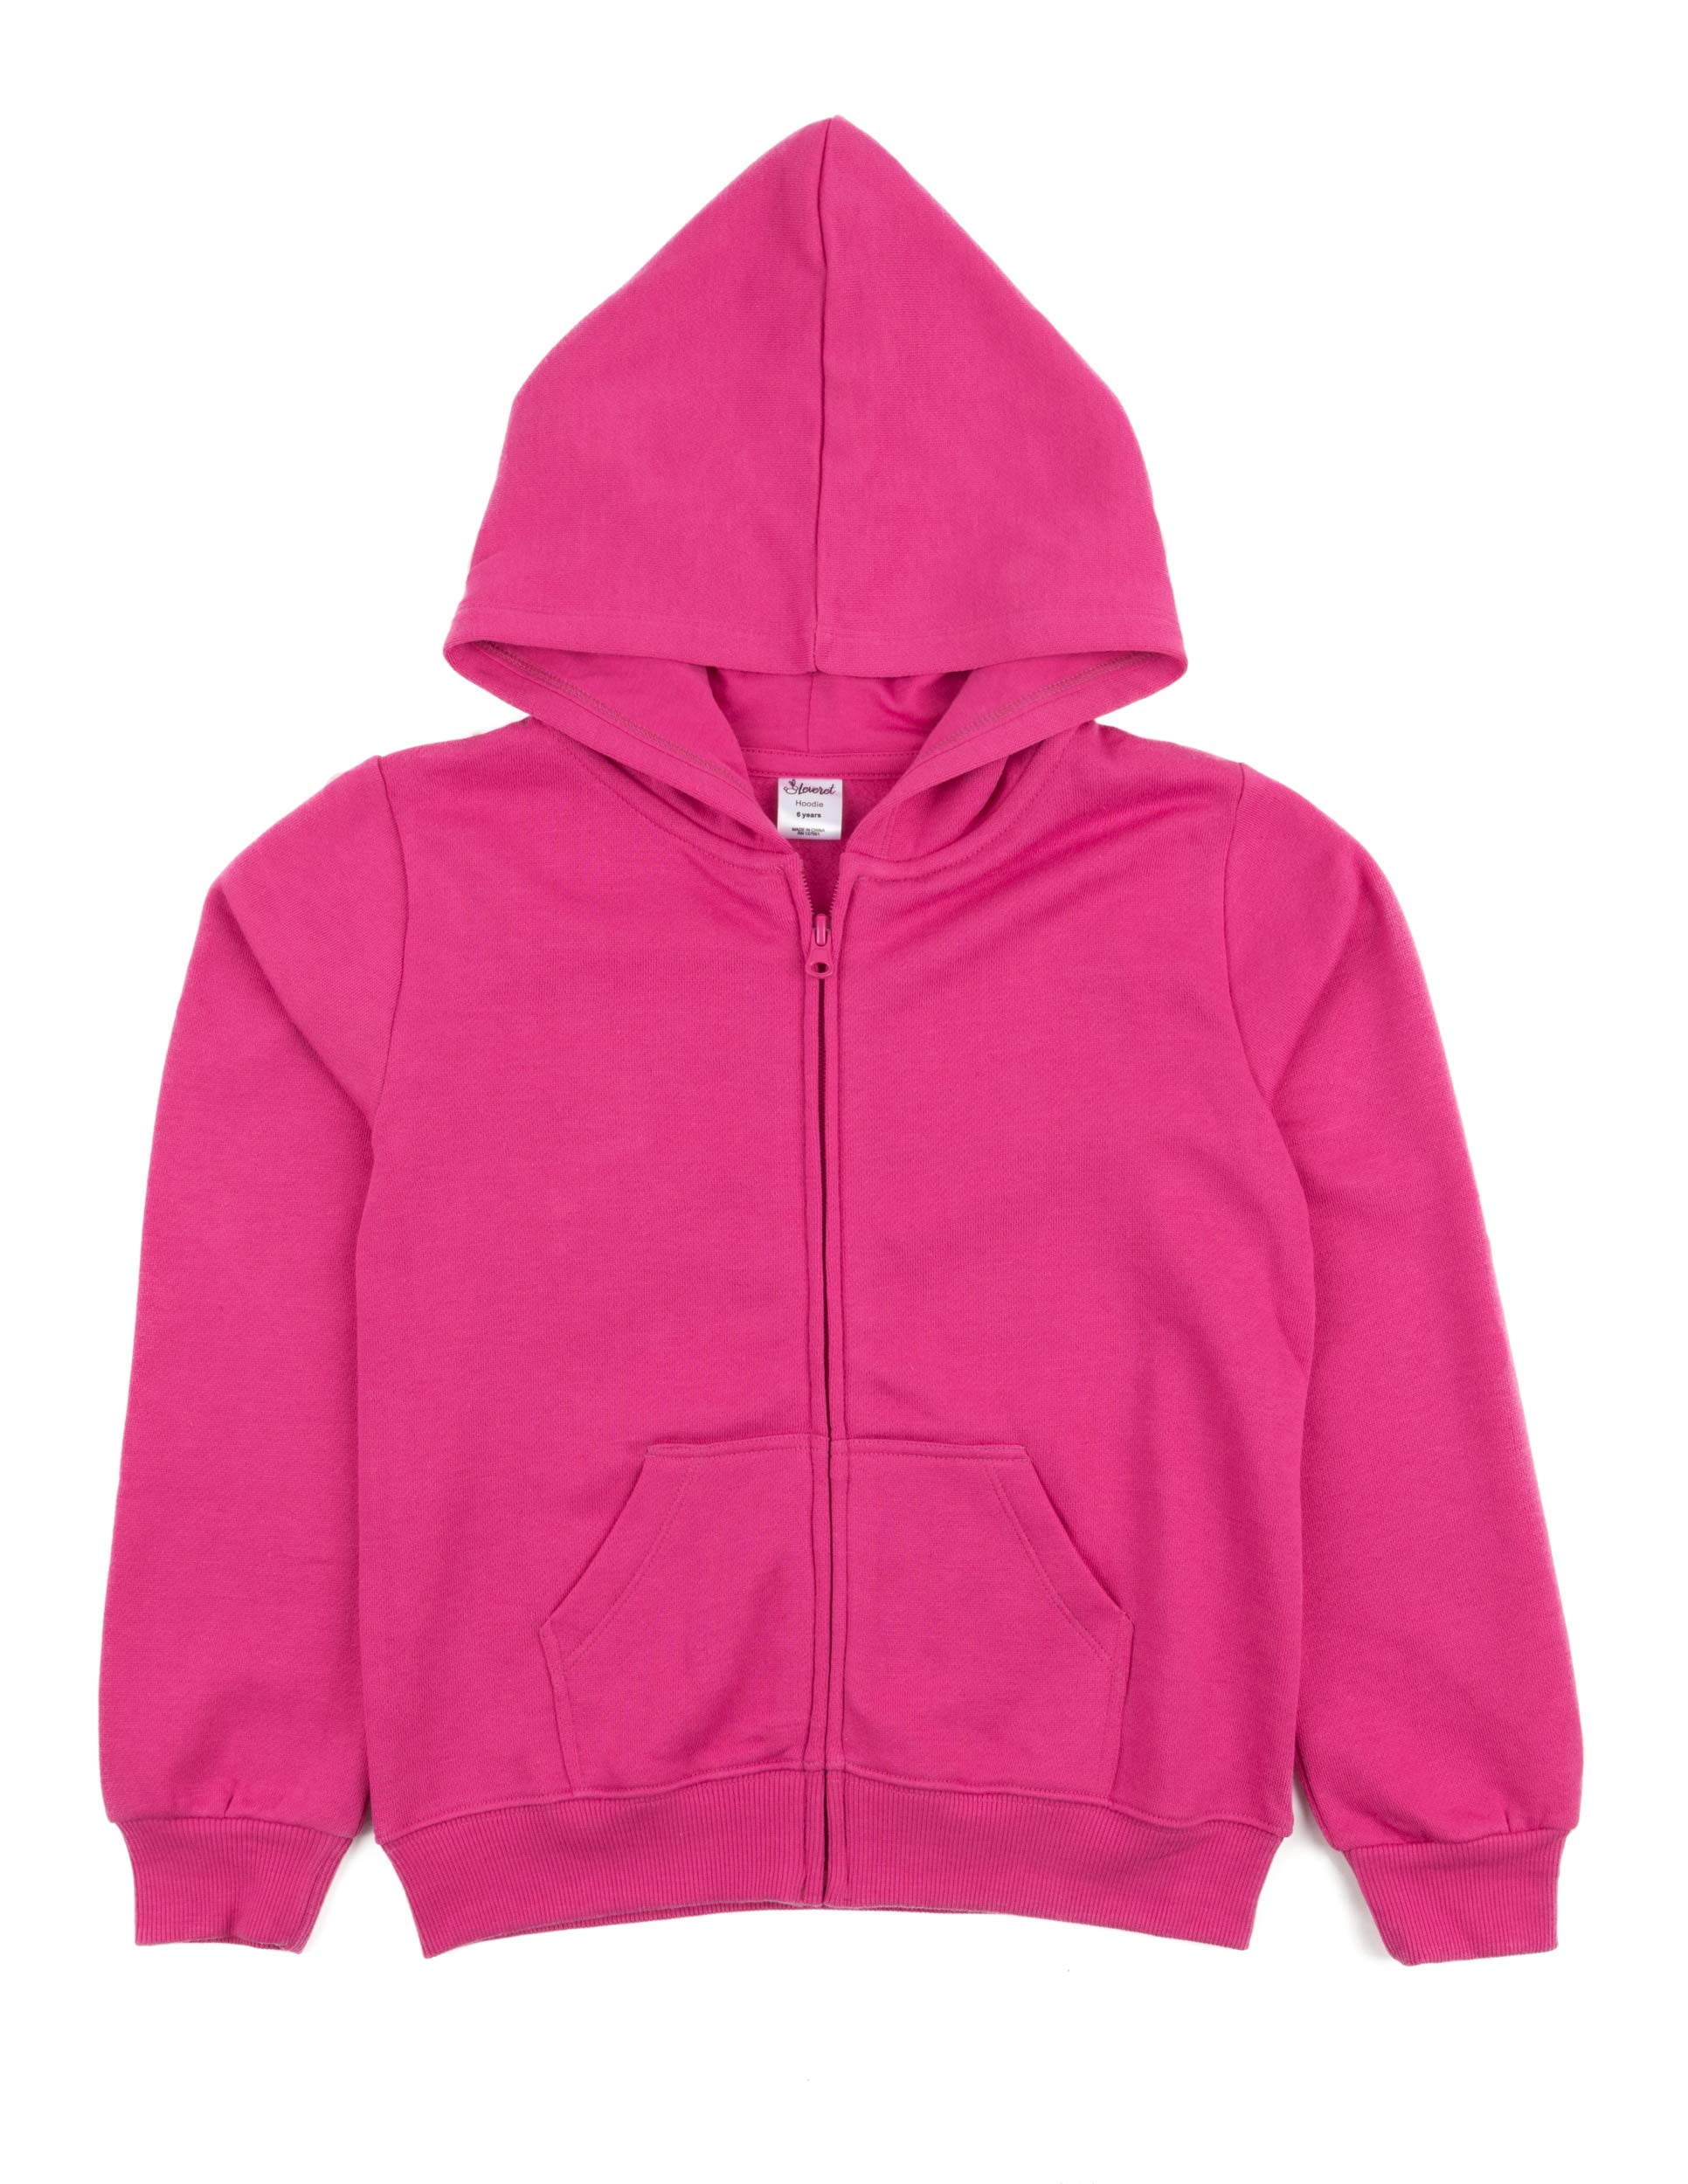 Leveret Kids & Toddler Boys Girls Sweatshirt Hoodie Jacket Variety of ...